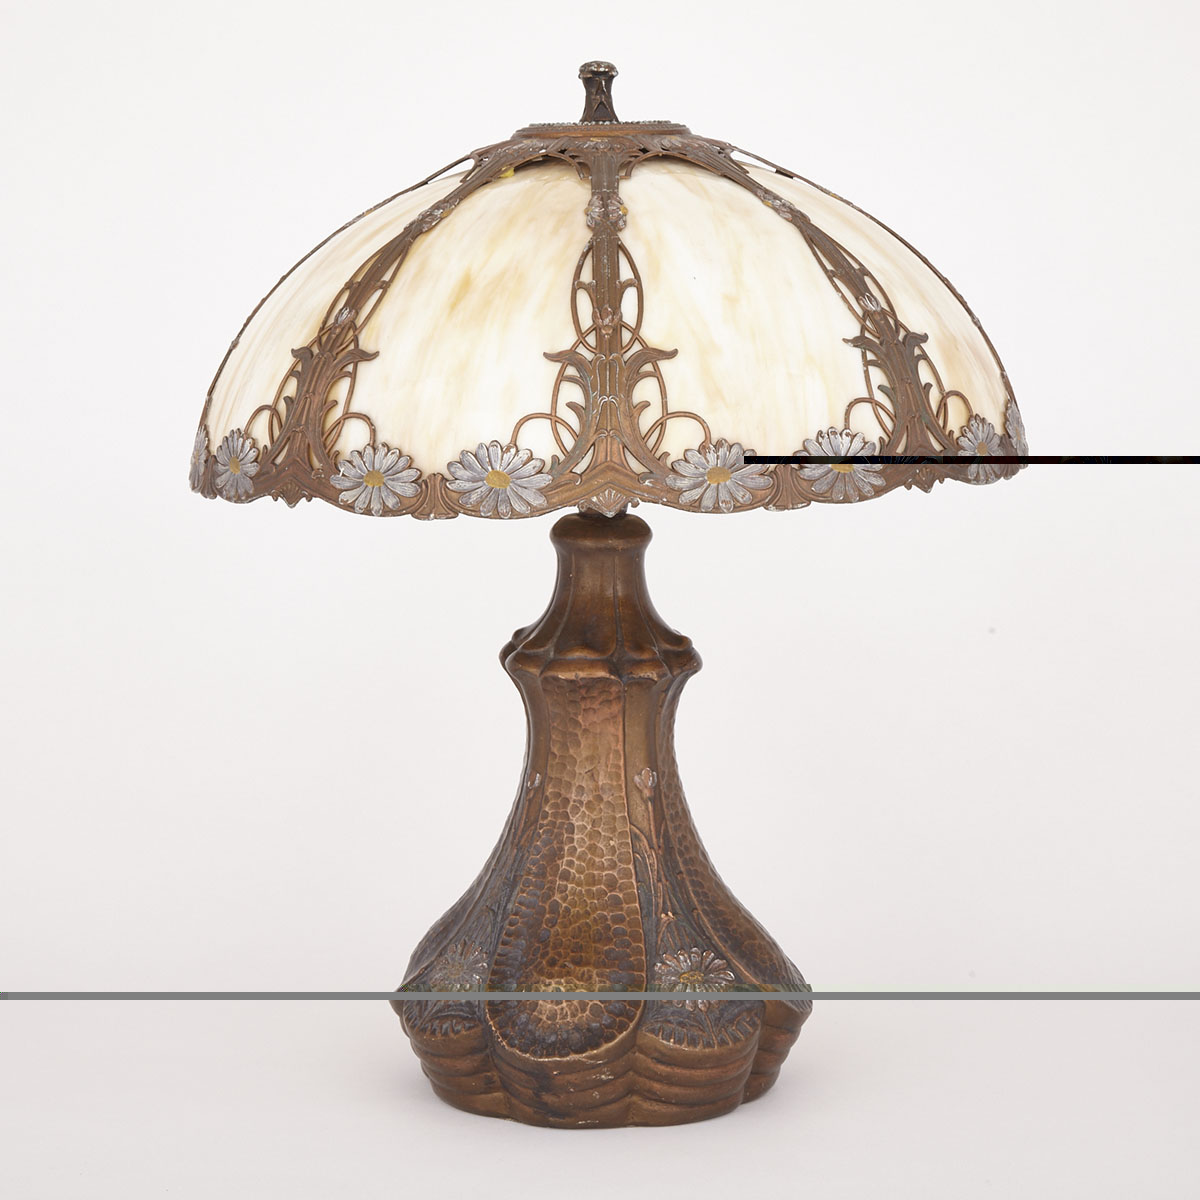 American Slag Glass Table Lamp, c.1900